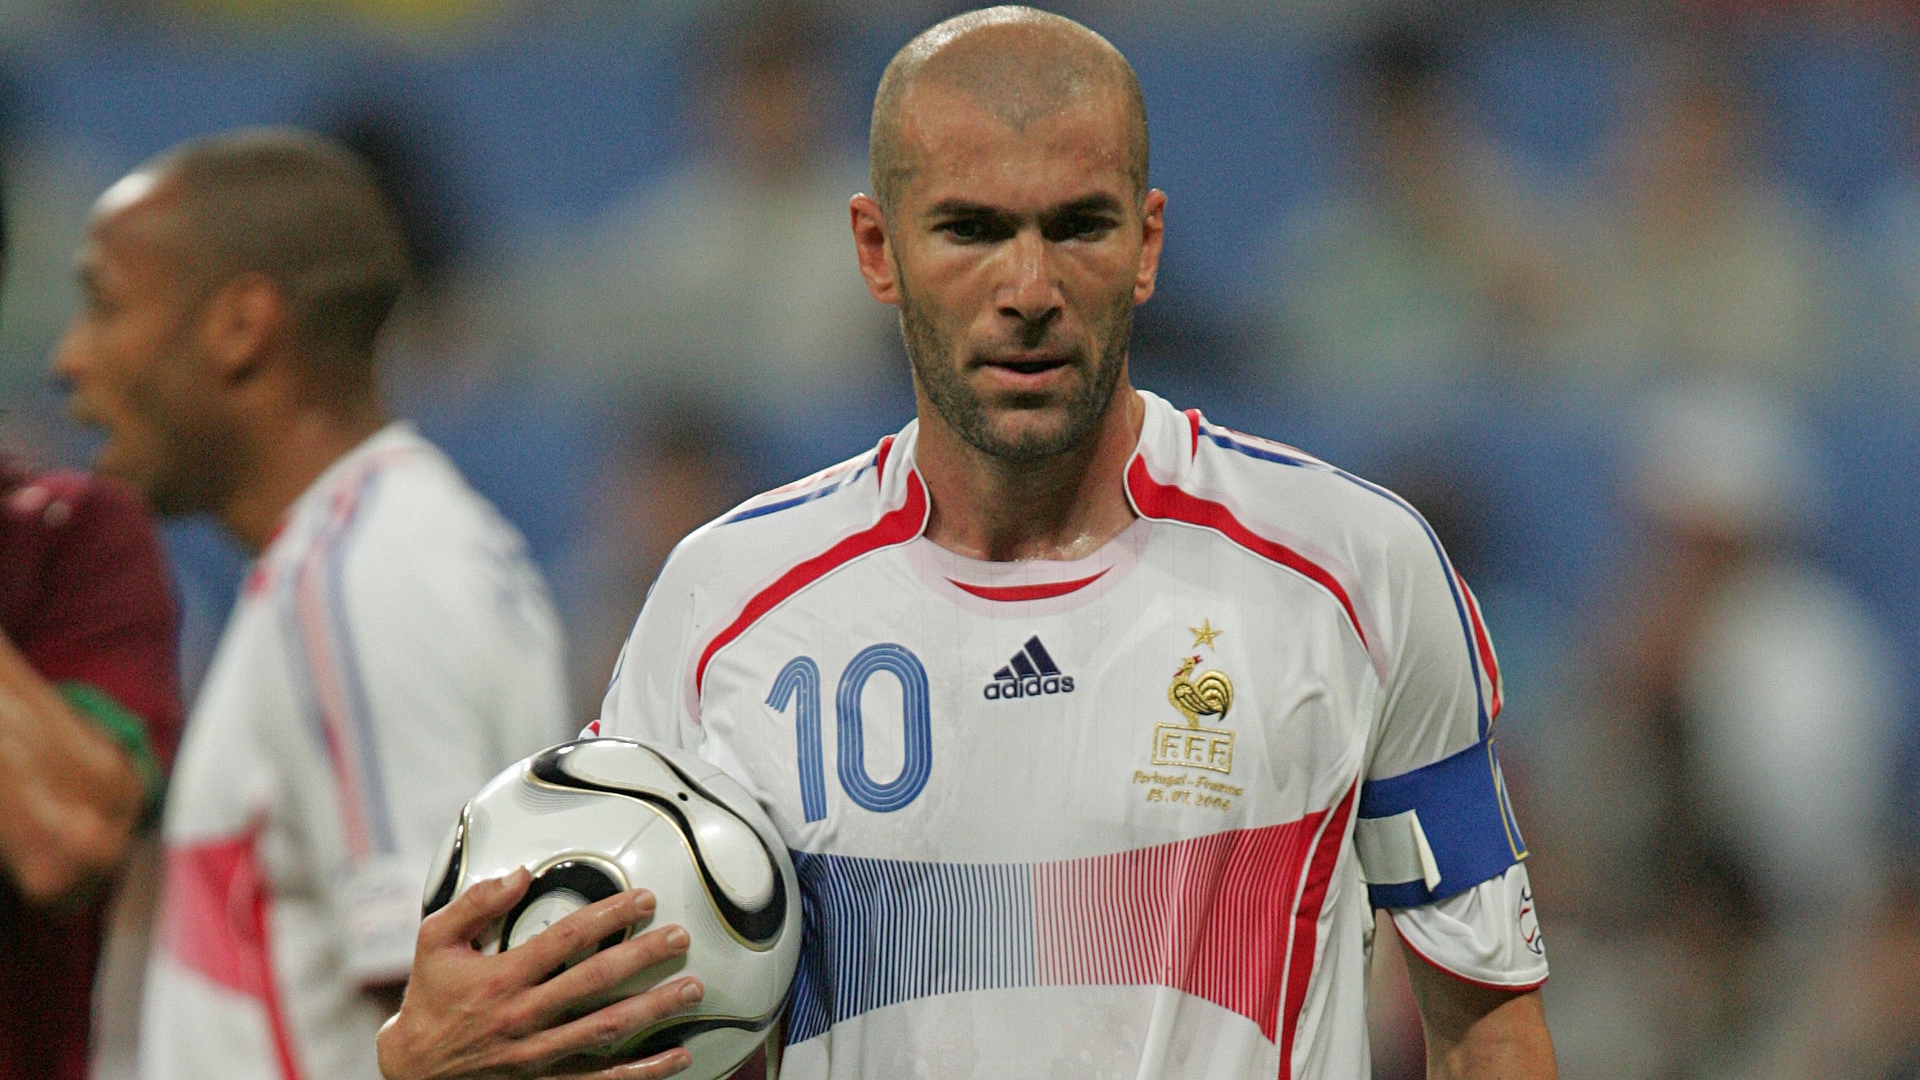 Wallpaper Zinedine Zidane, Football Player, Real Madrid - Zinedine Zidane - HD Wallpaper 